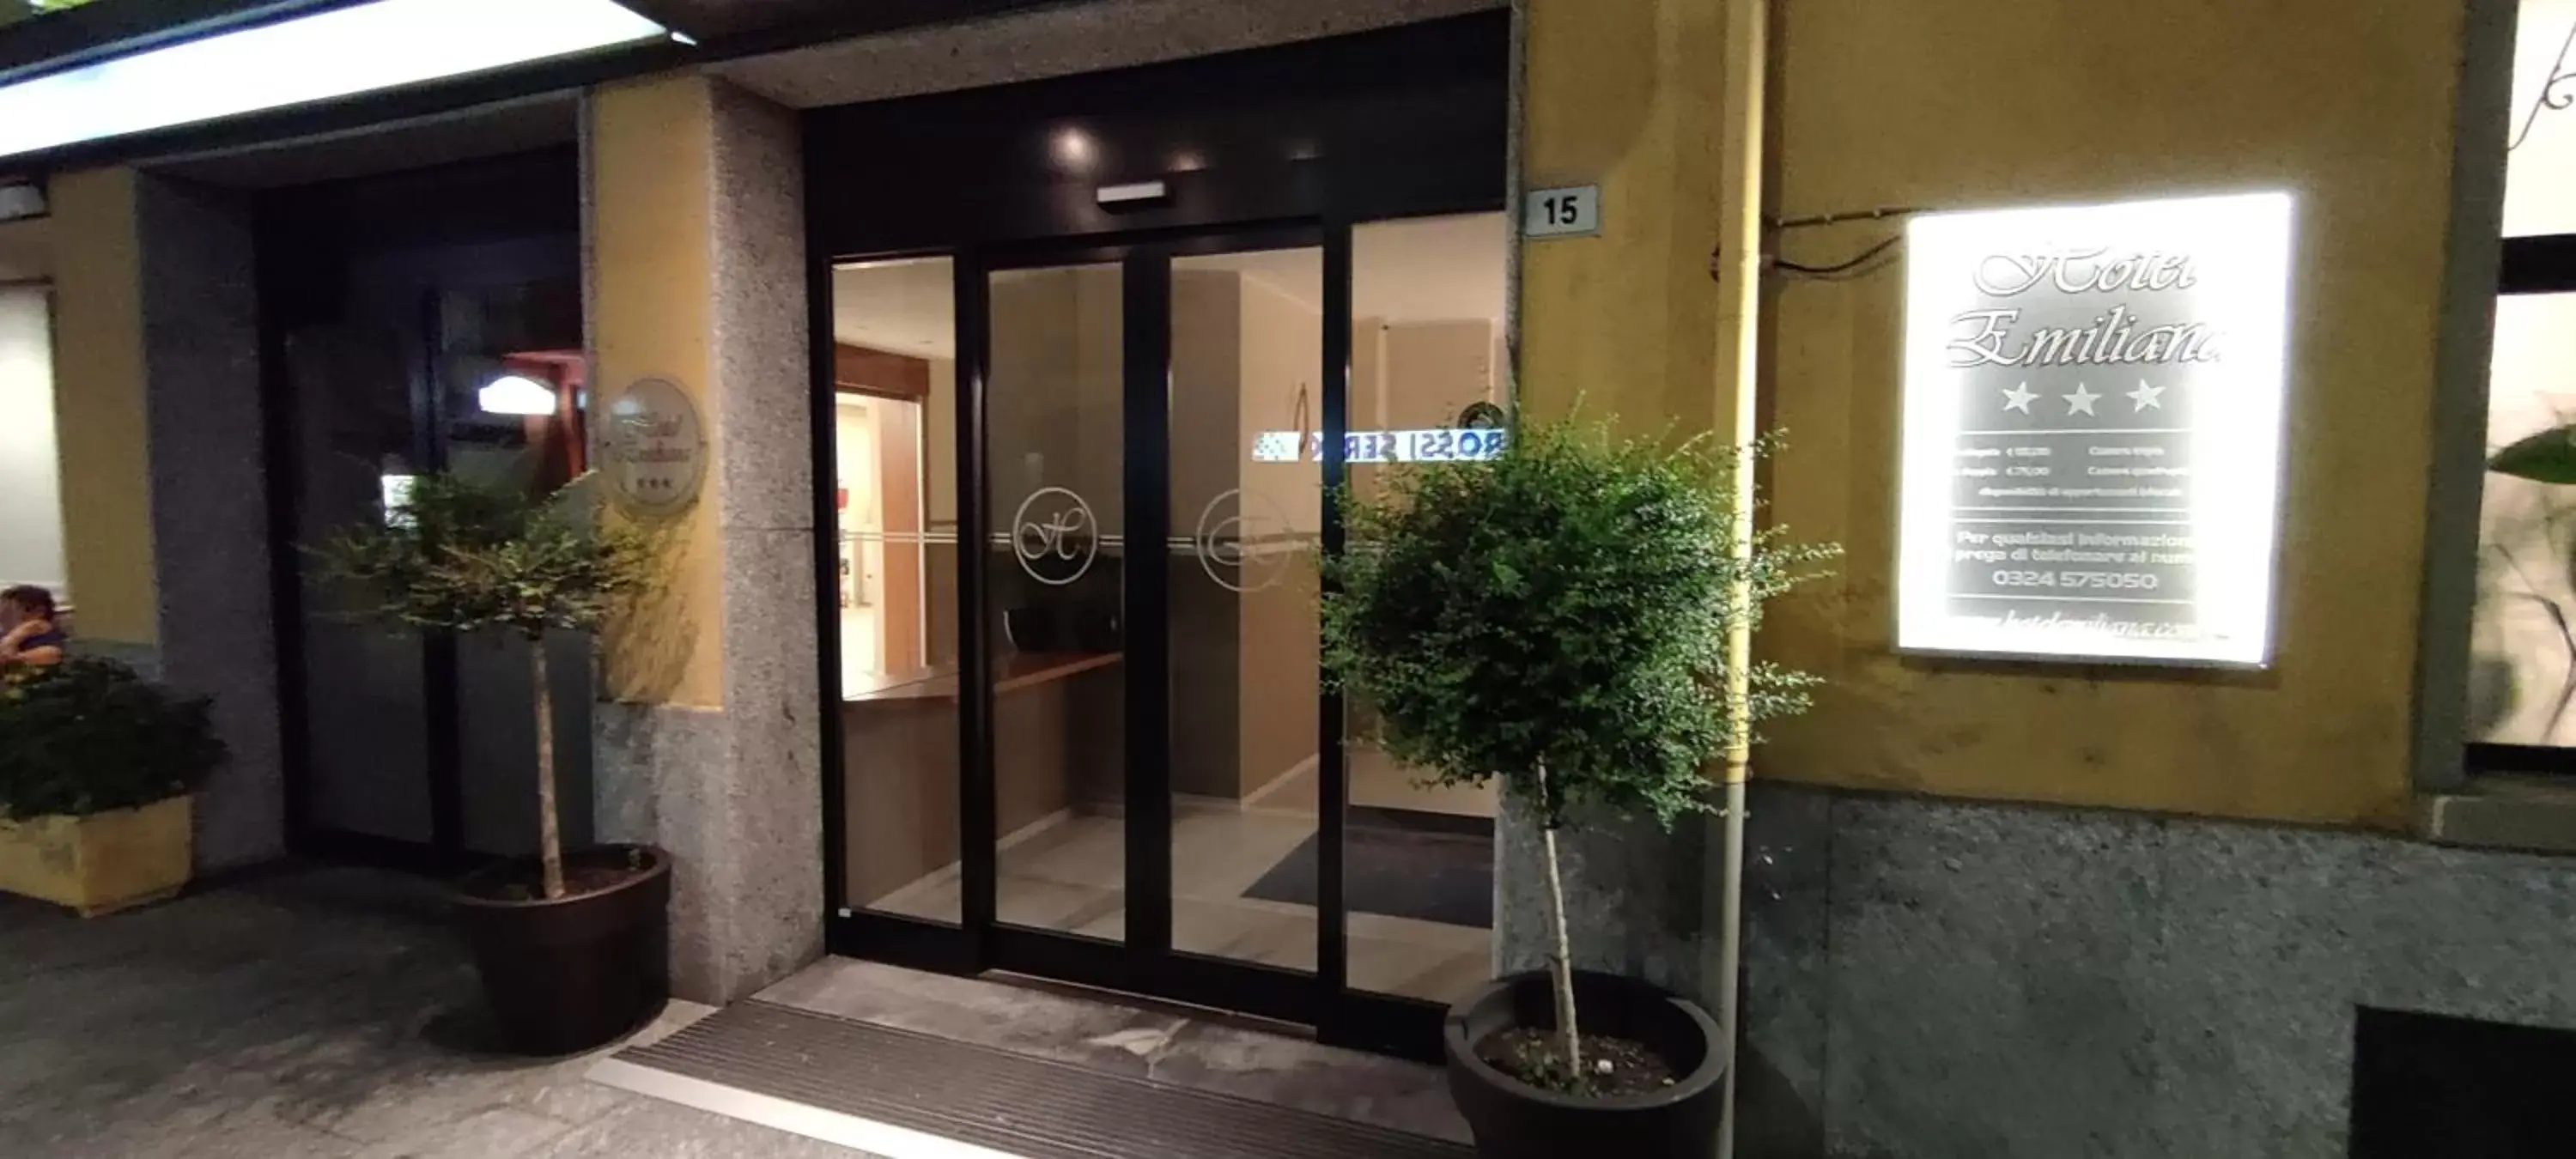 Facade/Entrance in Hotel Emiliana